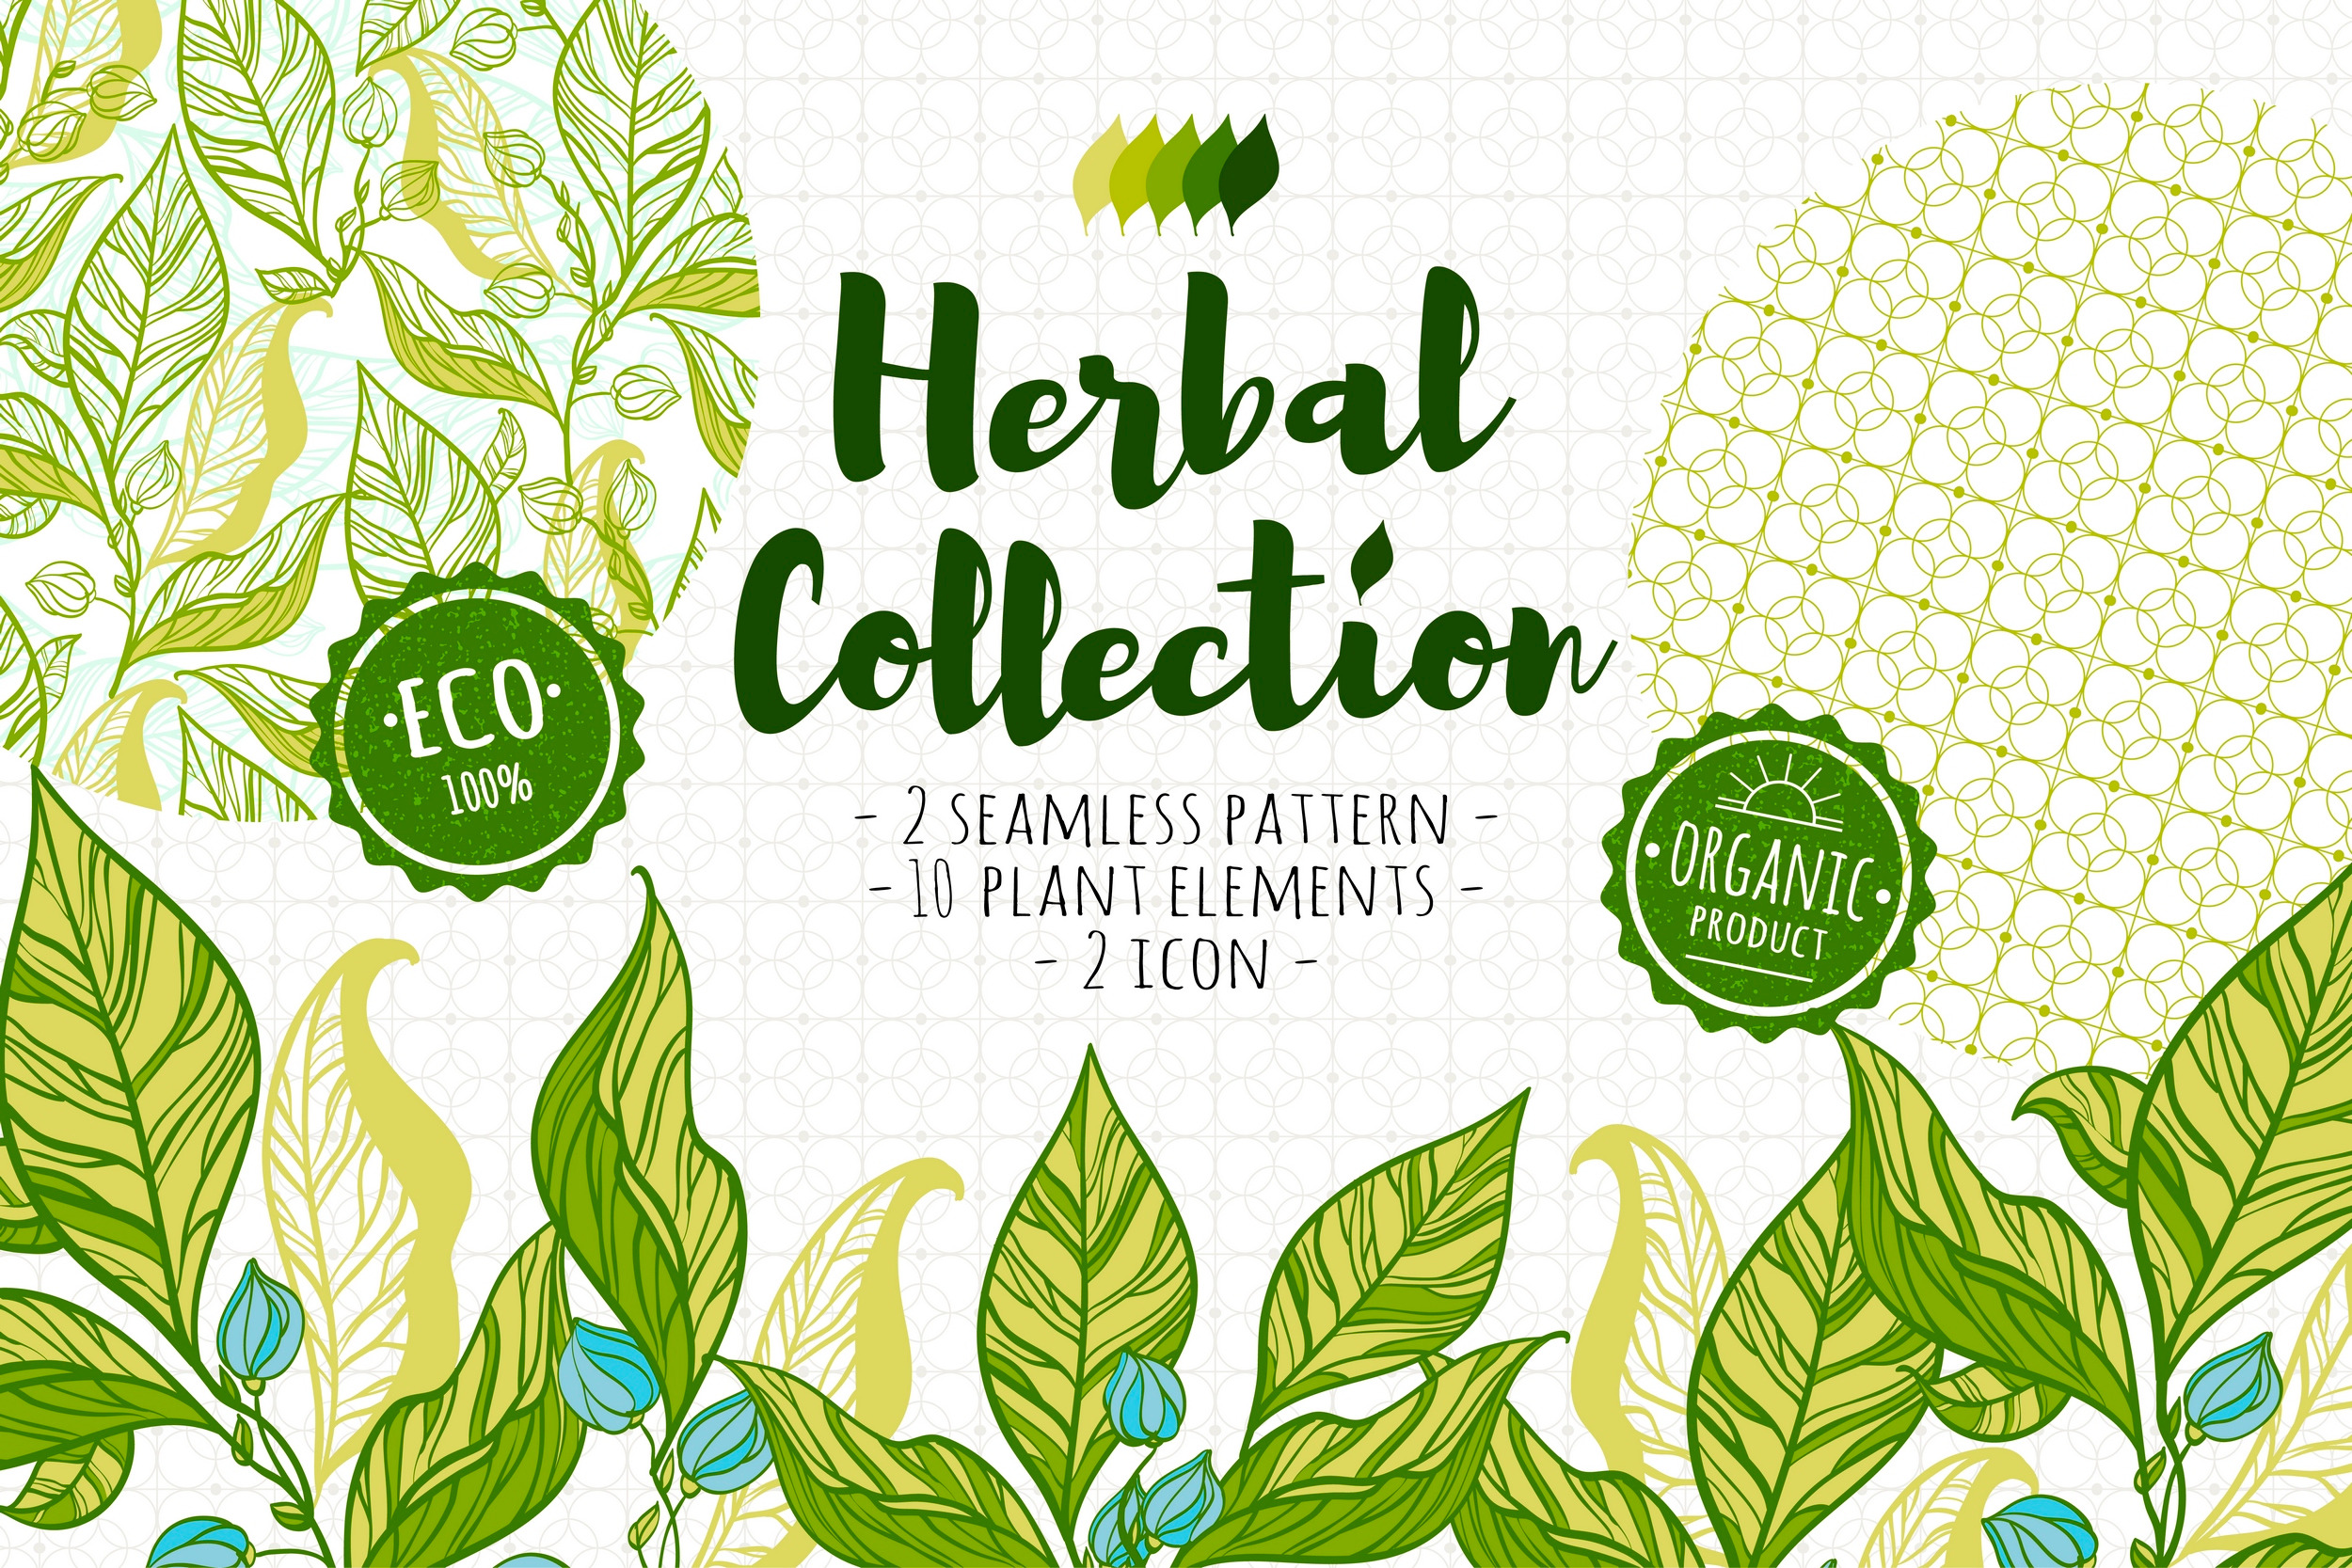 pr-herbal-collection-01-.jpg